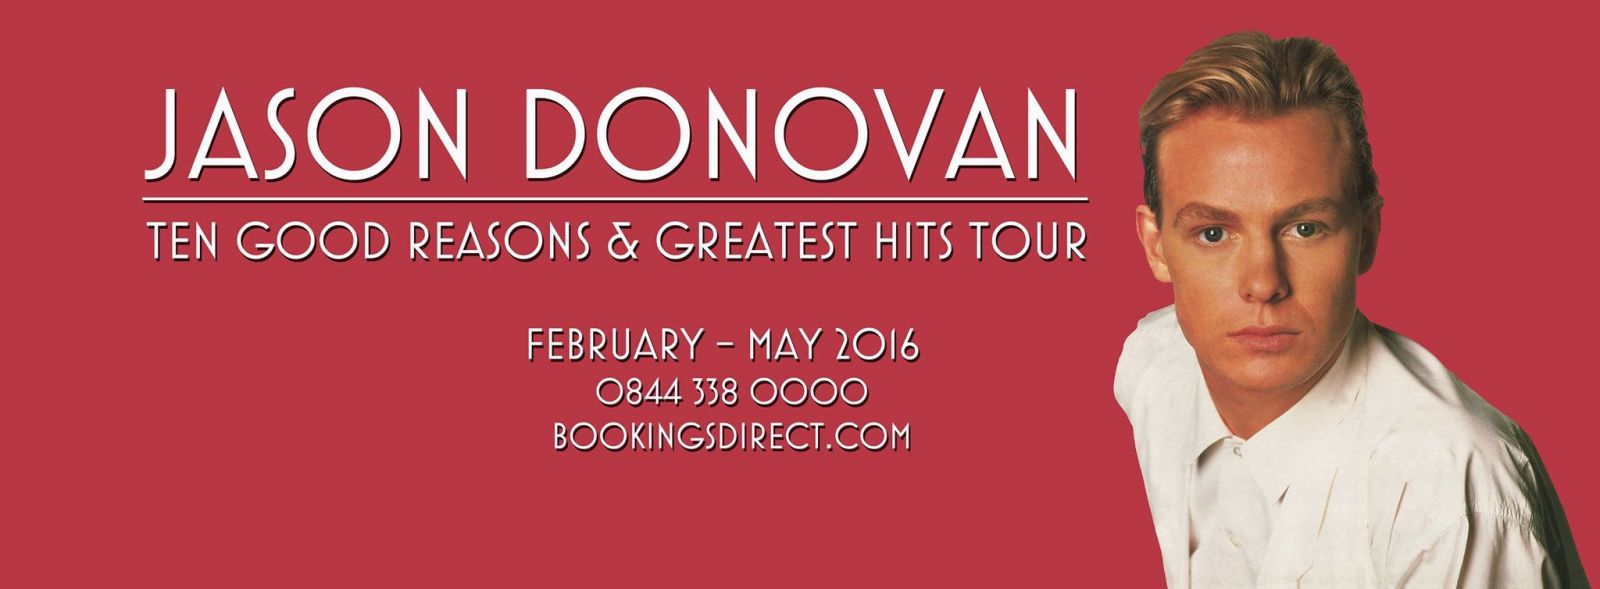 Jason Donovan 10 Good Reasons Tour 2016